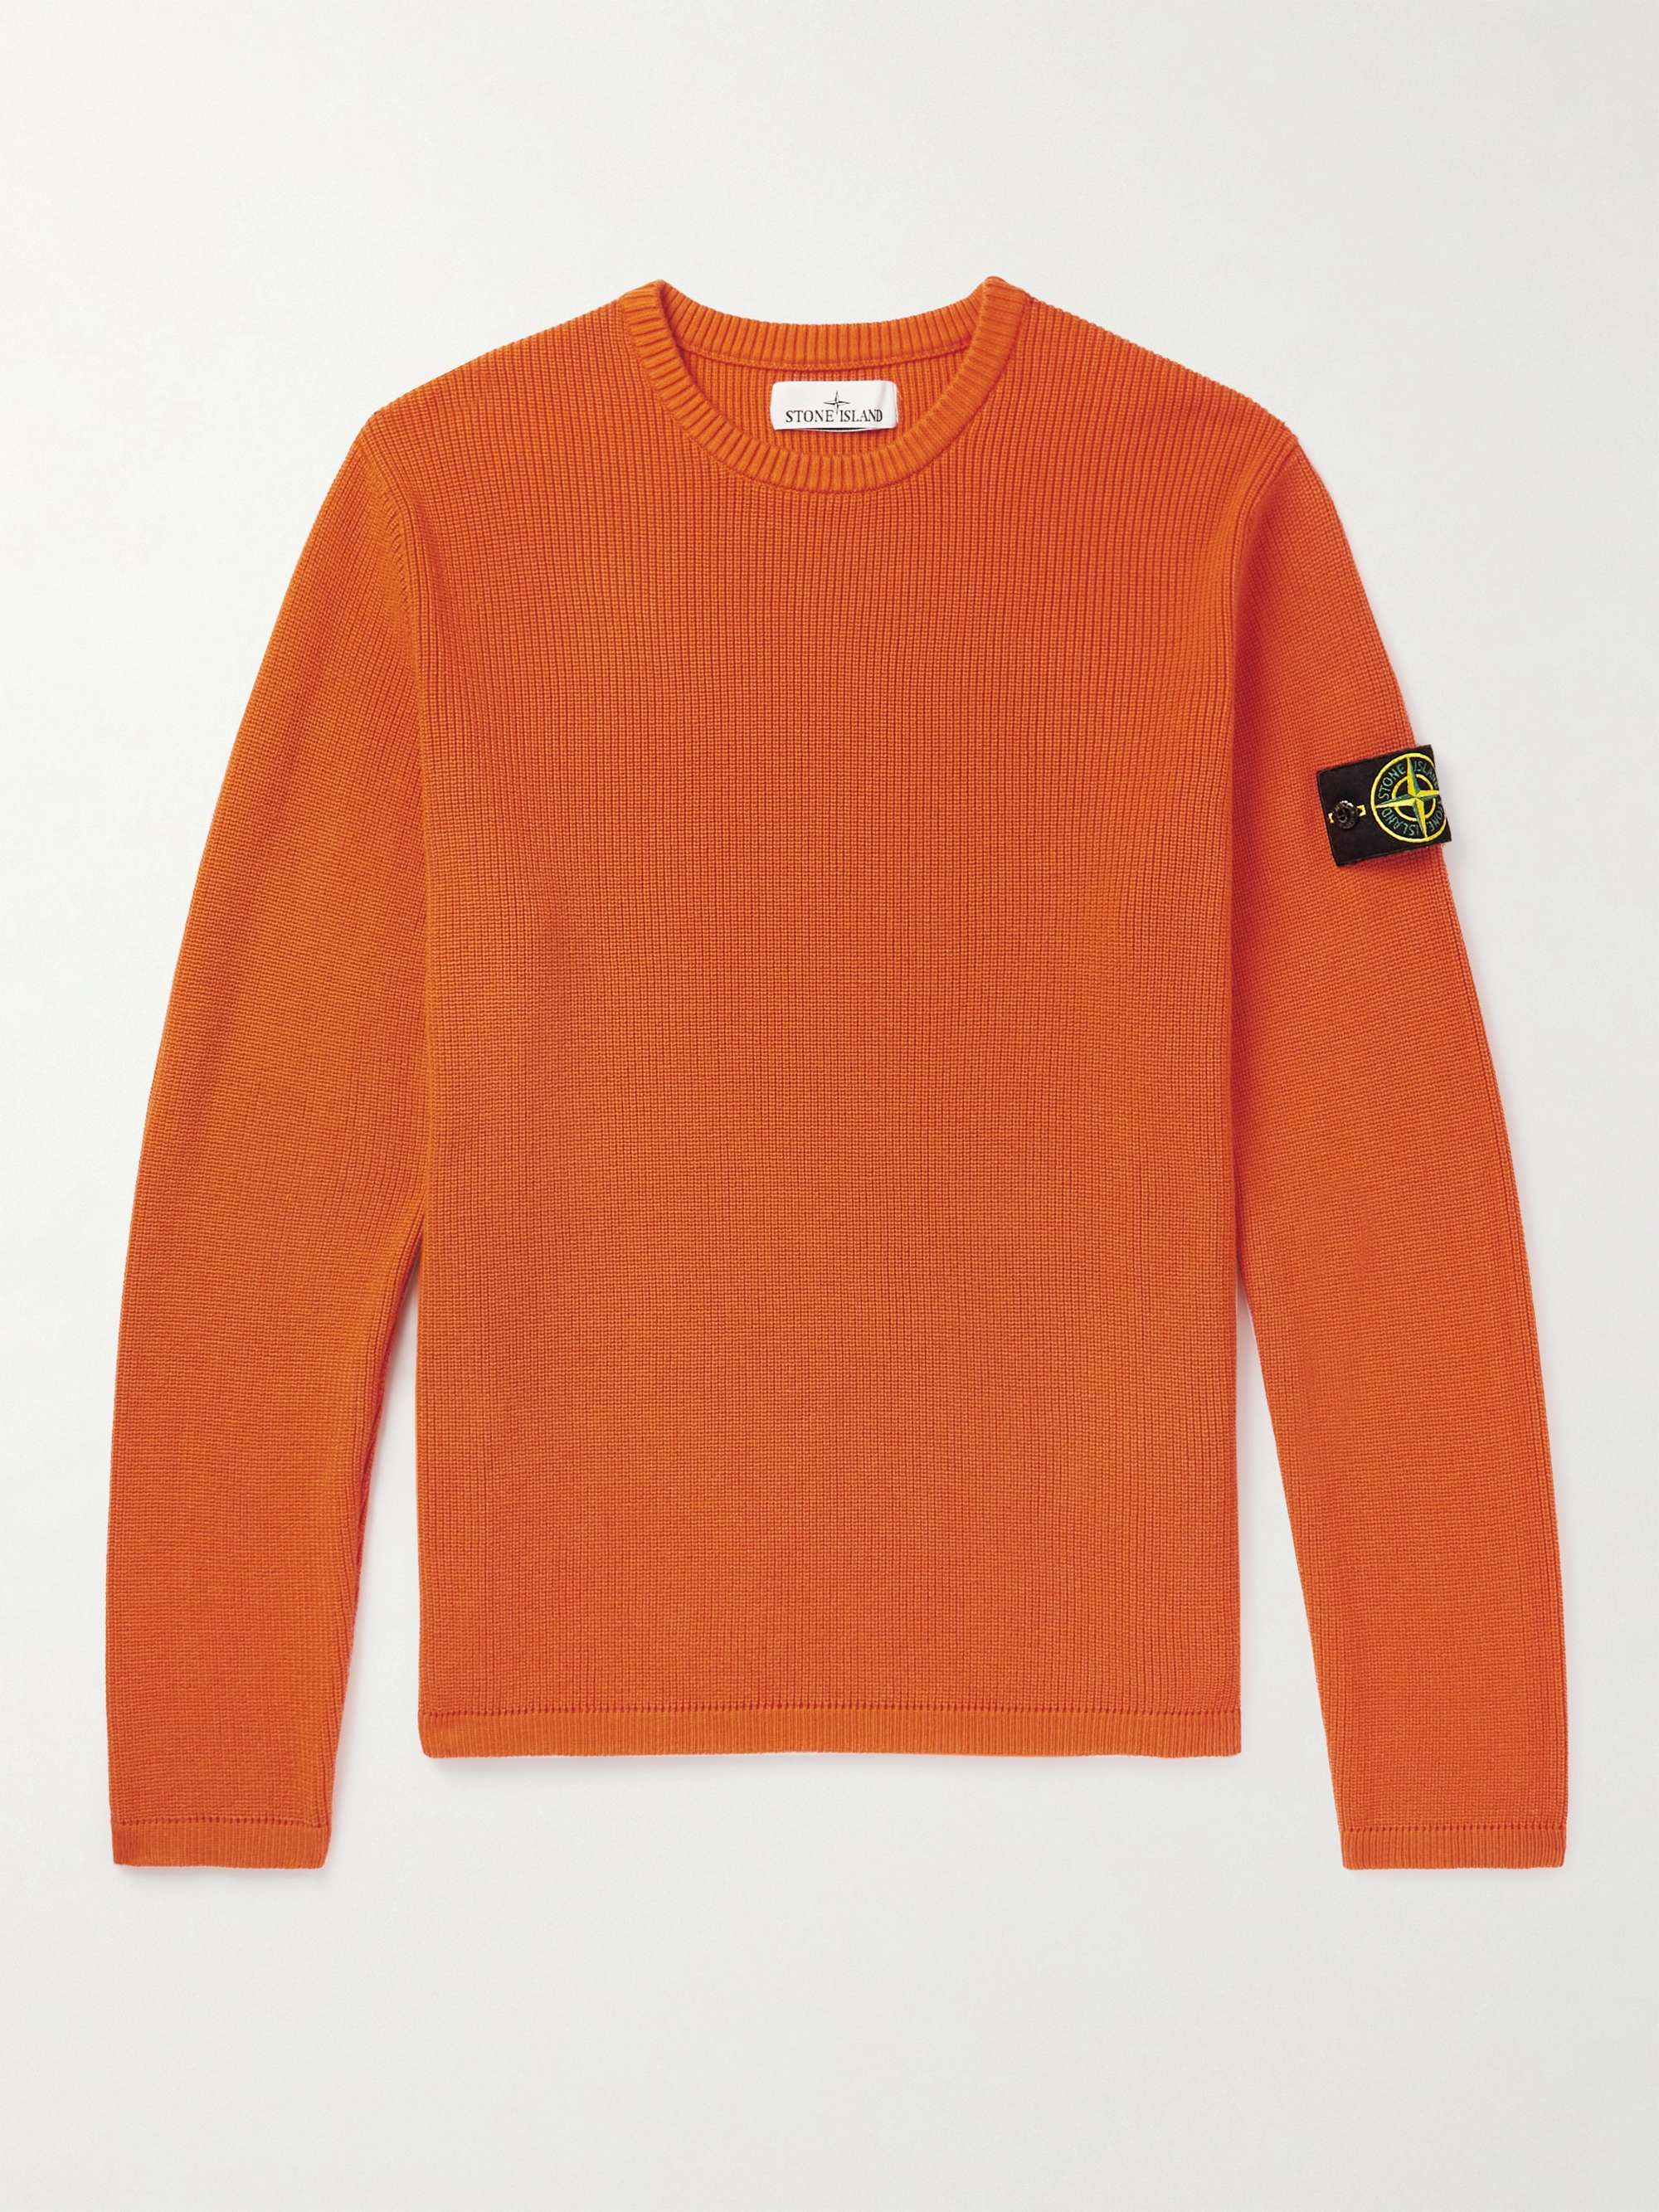 STONE ISLAND Logo-Appliqued Cotton Sweater,Orange